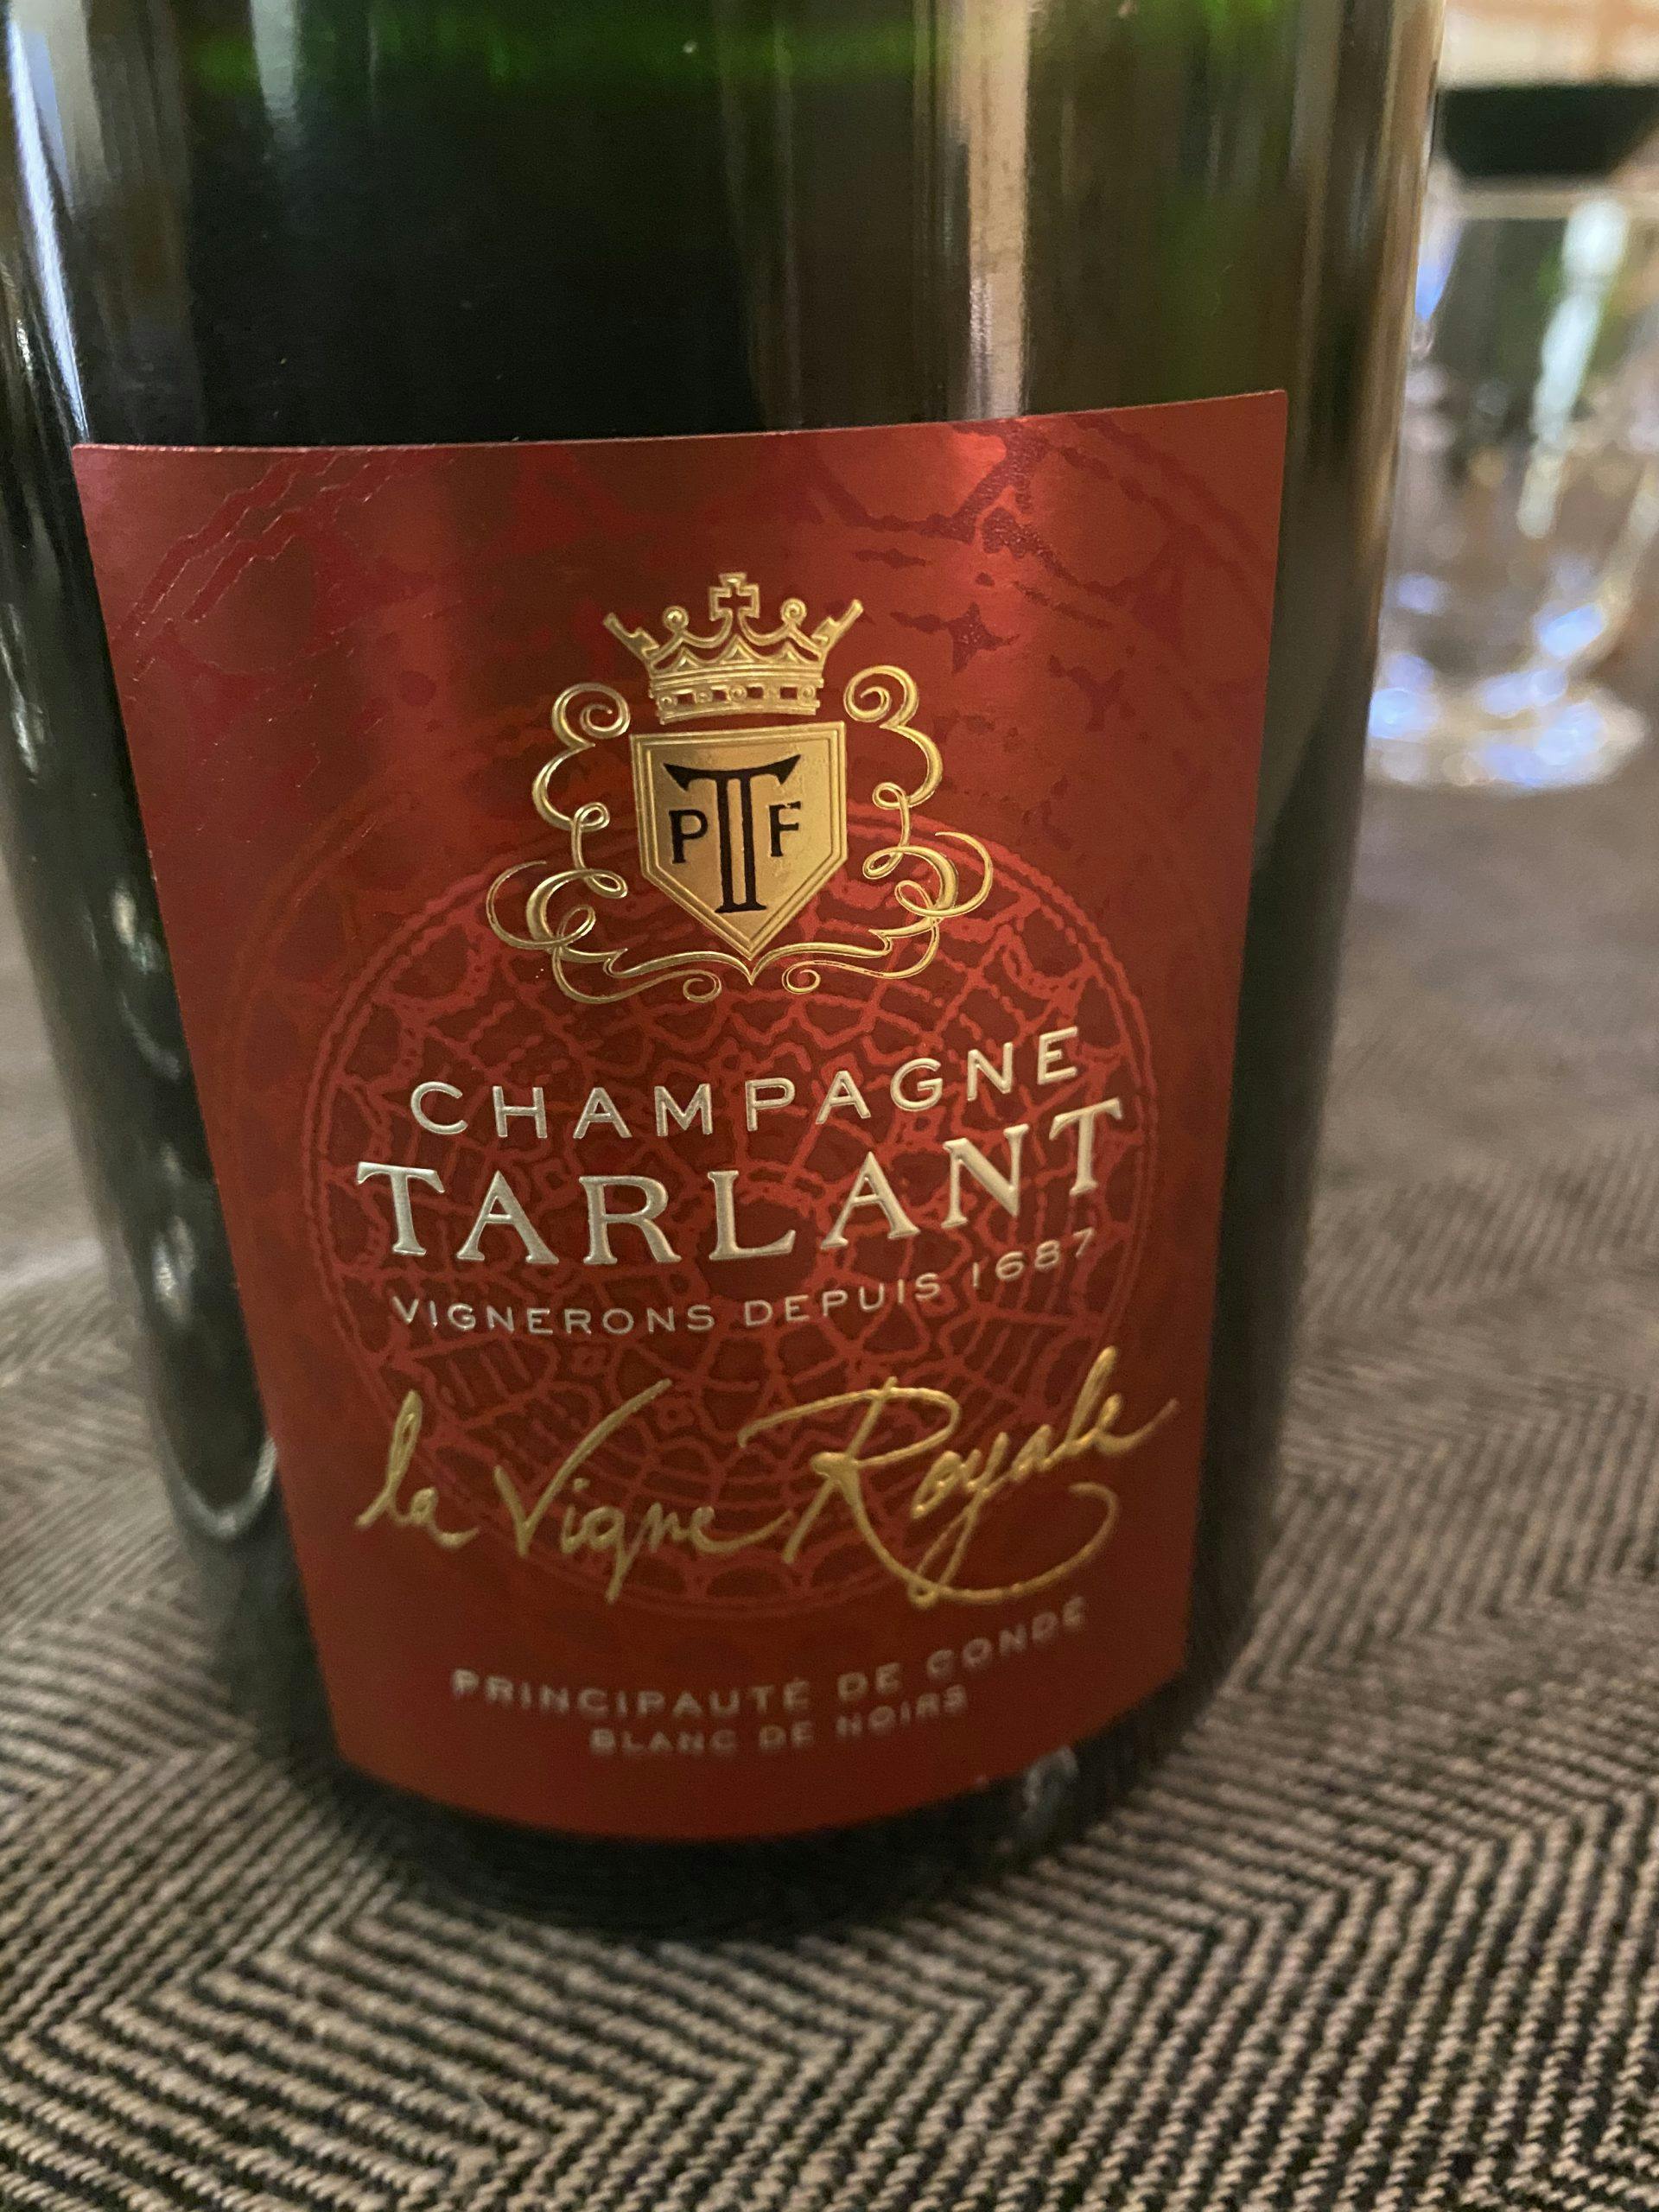 Champagne Tarlant La Vigne Royale